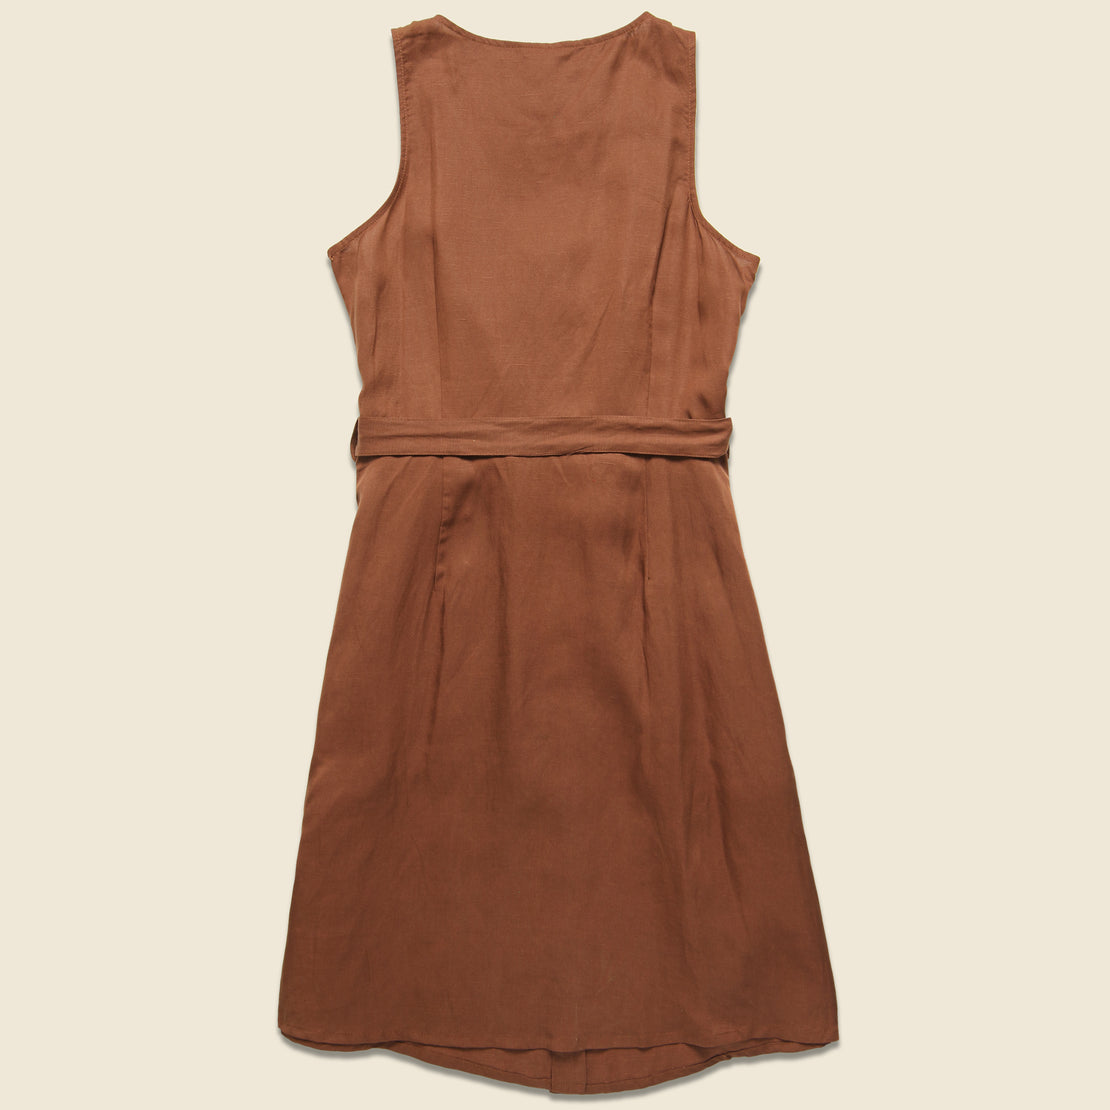 Aletta Dress - Copper - Bridge & Burn - STAG Provisions - W - Onepiece - Dress